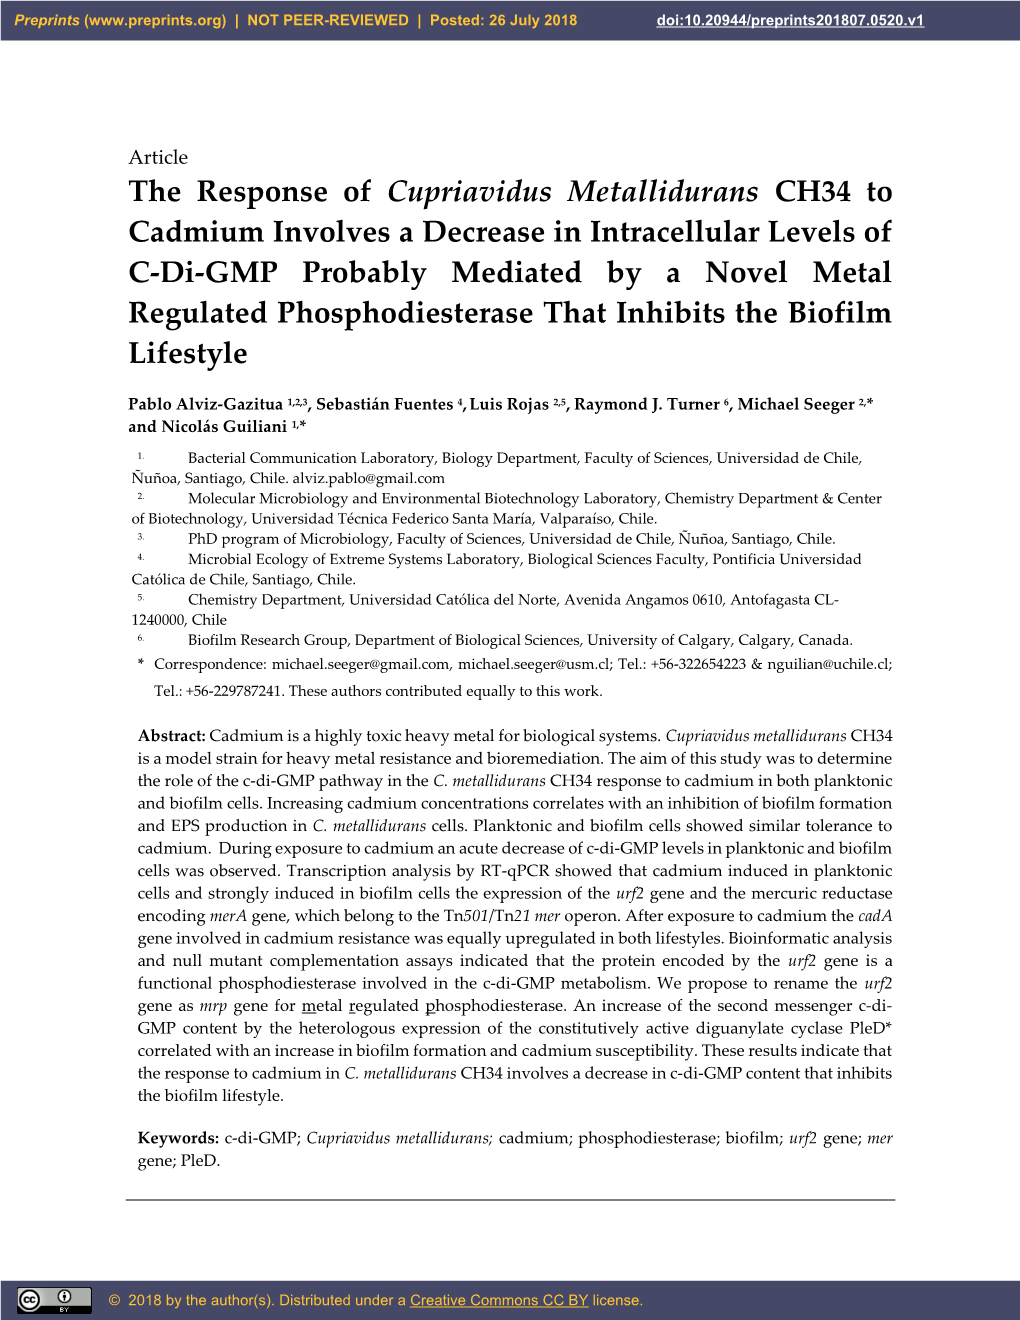 The Response of Cupriavidus Metallidurans CH34 to Cadmium